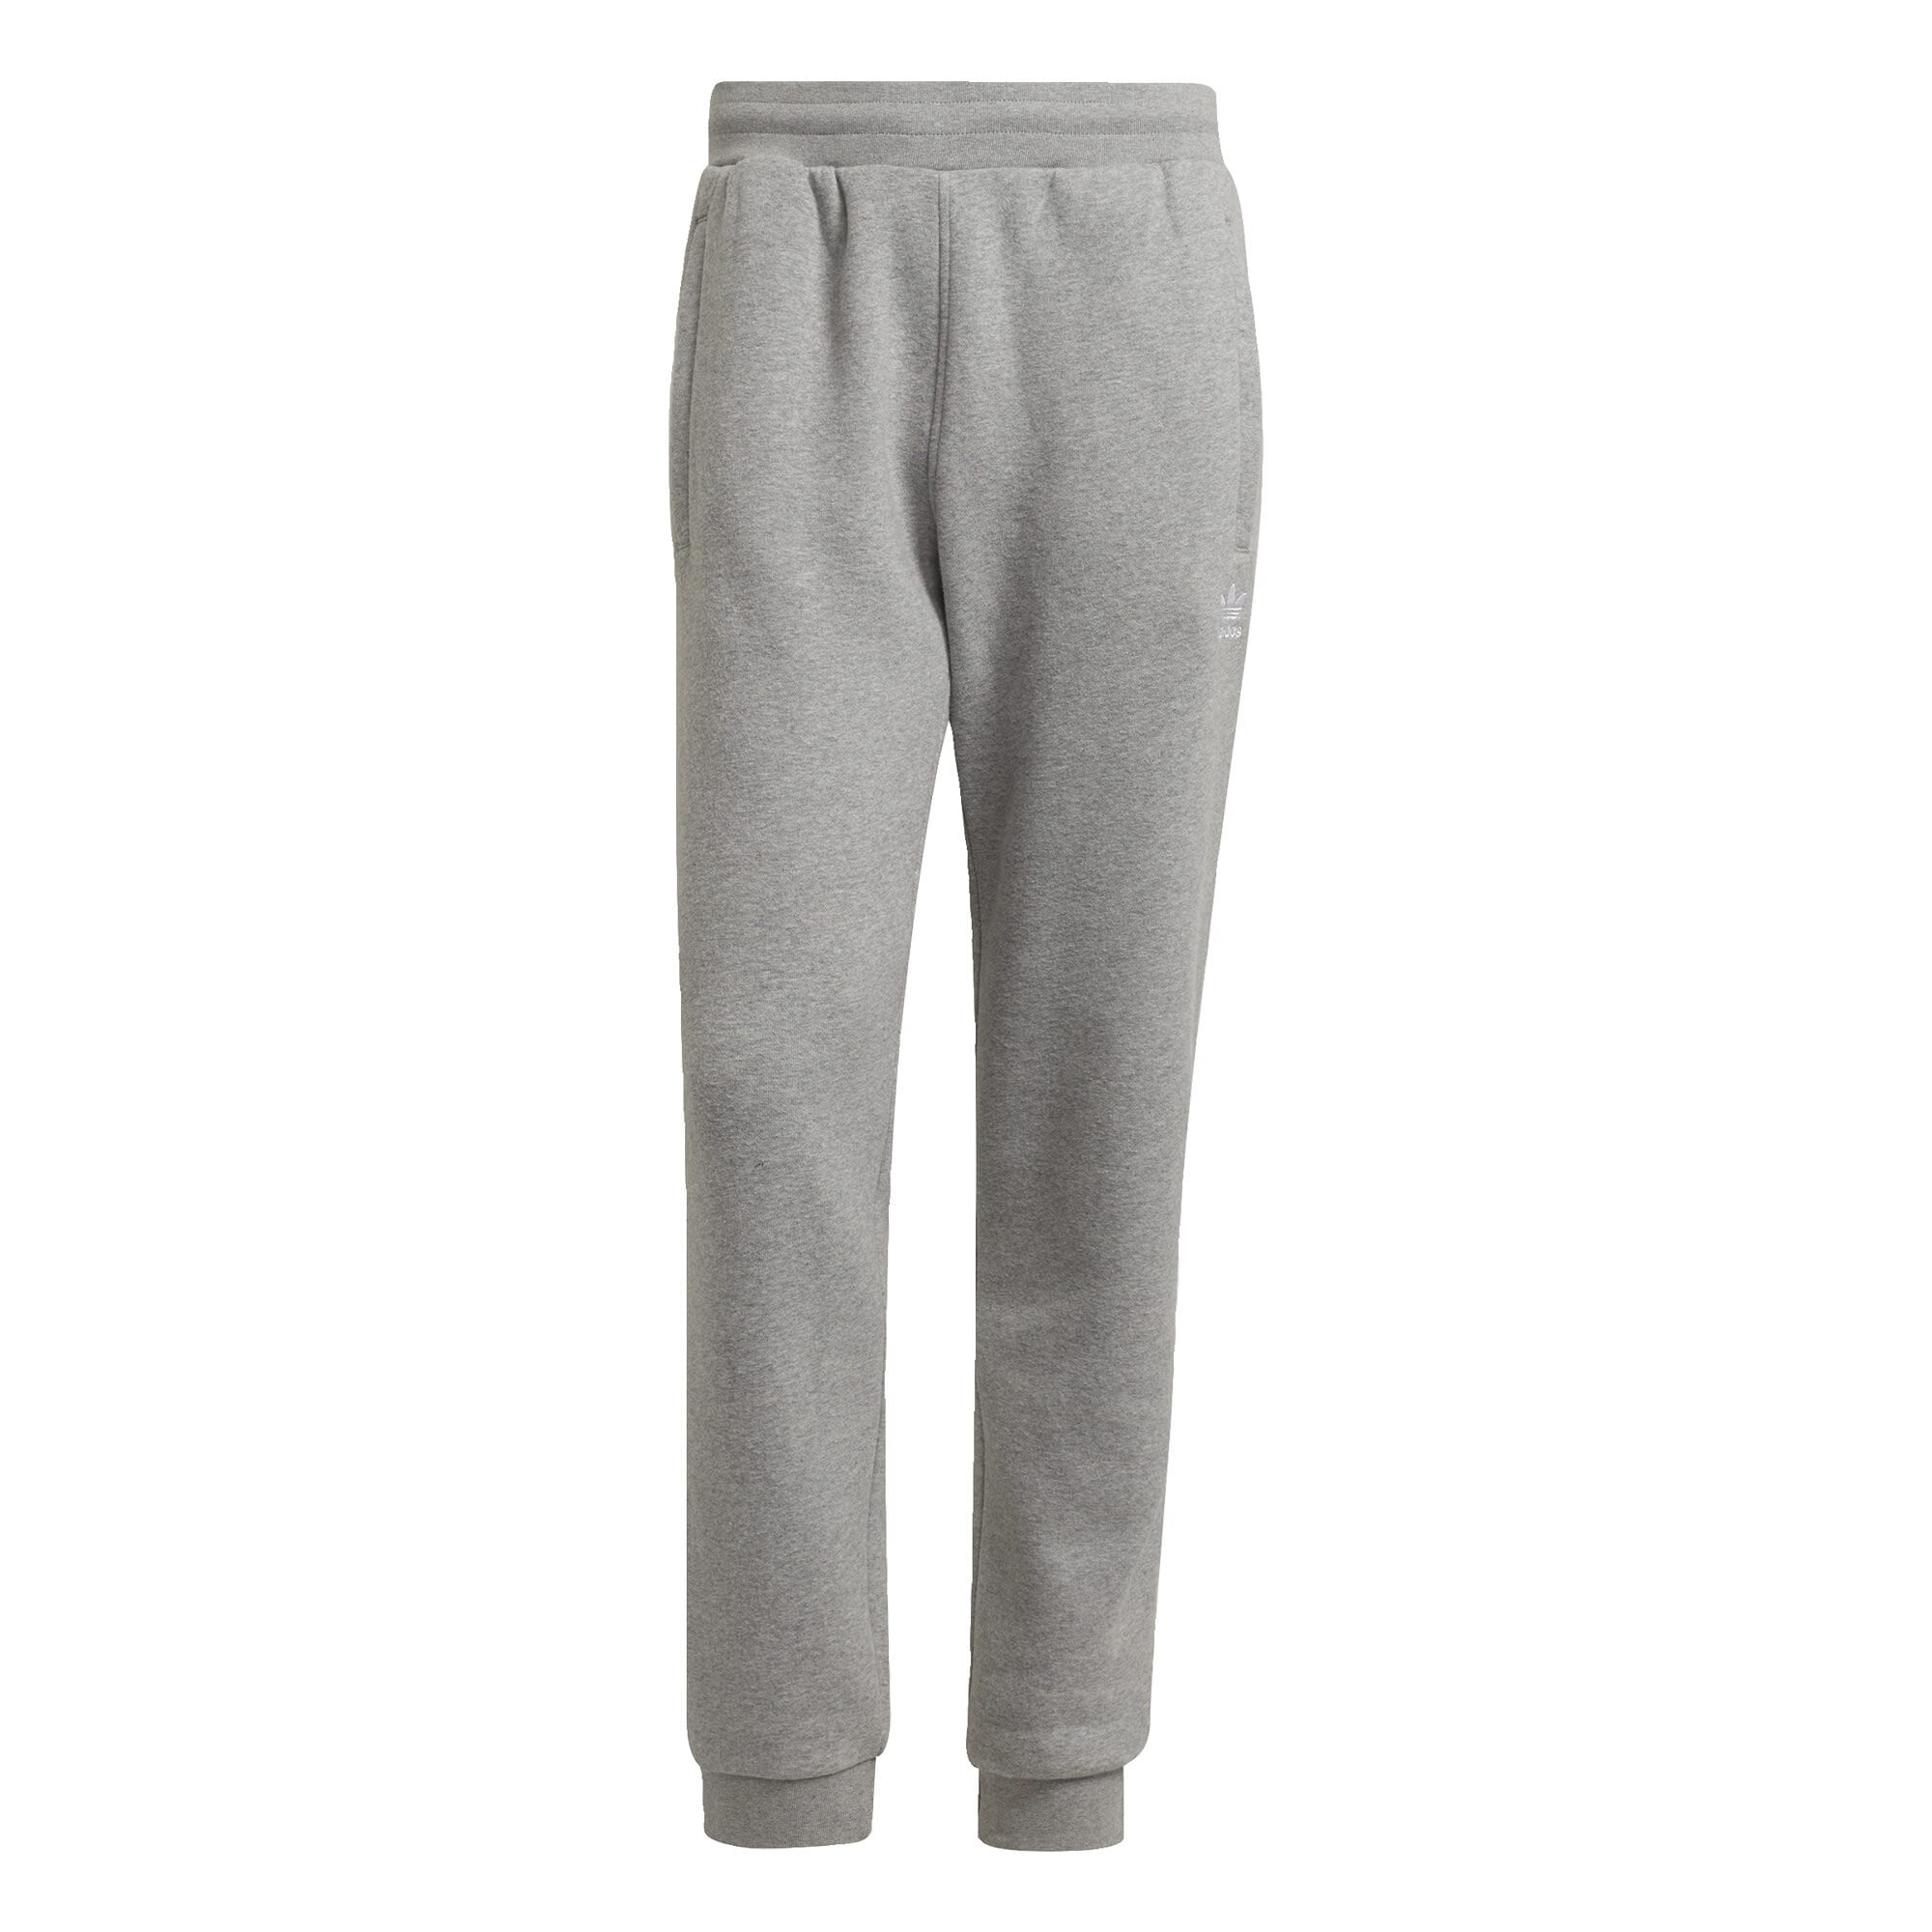 adidas Originals Essentials Pant - Medium Grey Heather - Bottoms - Mens ...